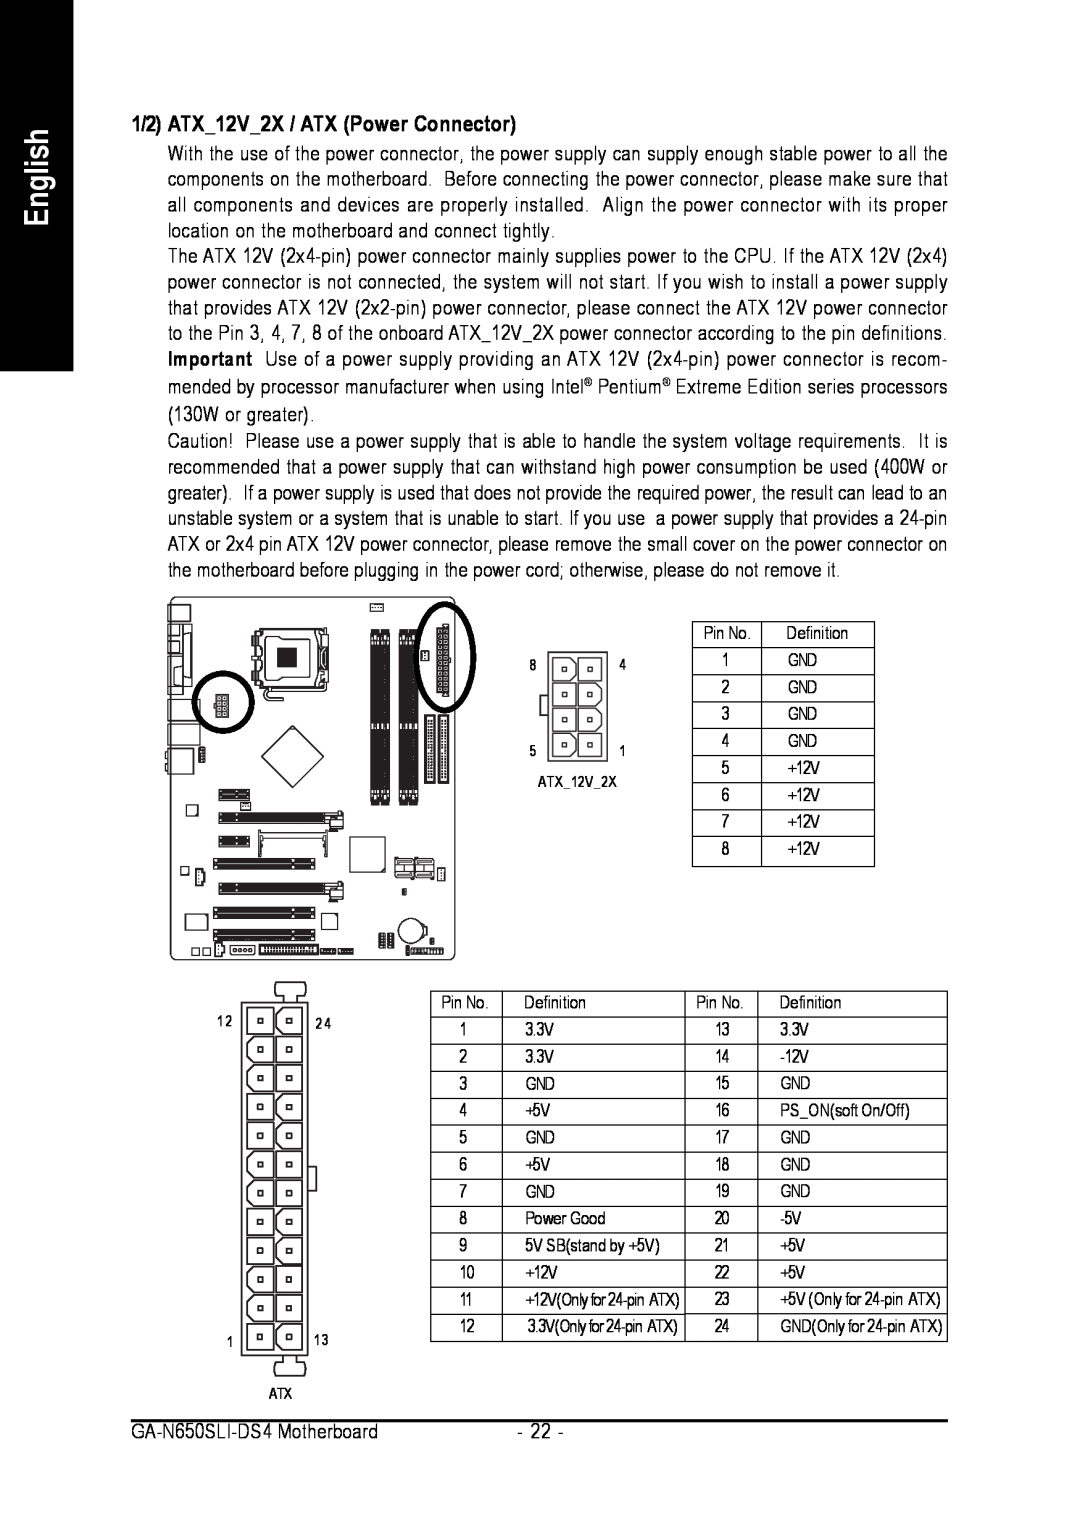 Intel GA-N650SLI-DS4 user manual English, 1/2 ATX12V2X / ATX Power Connector 